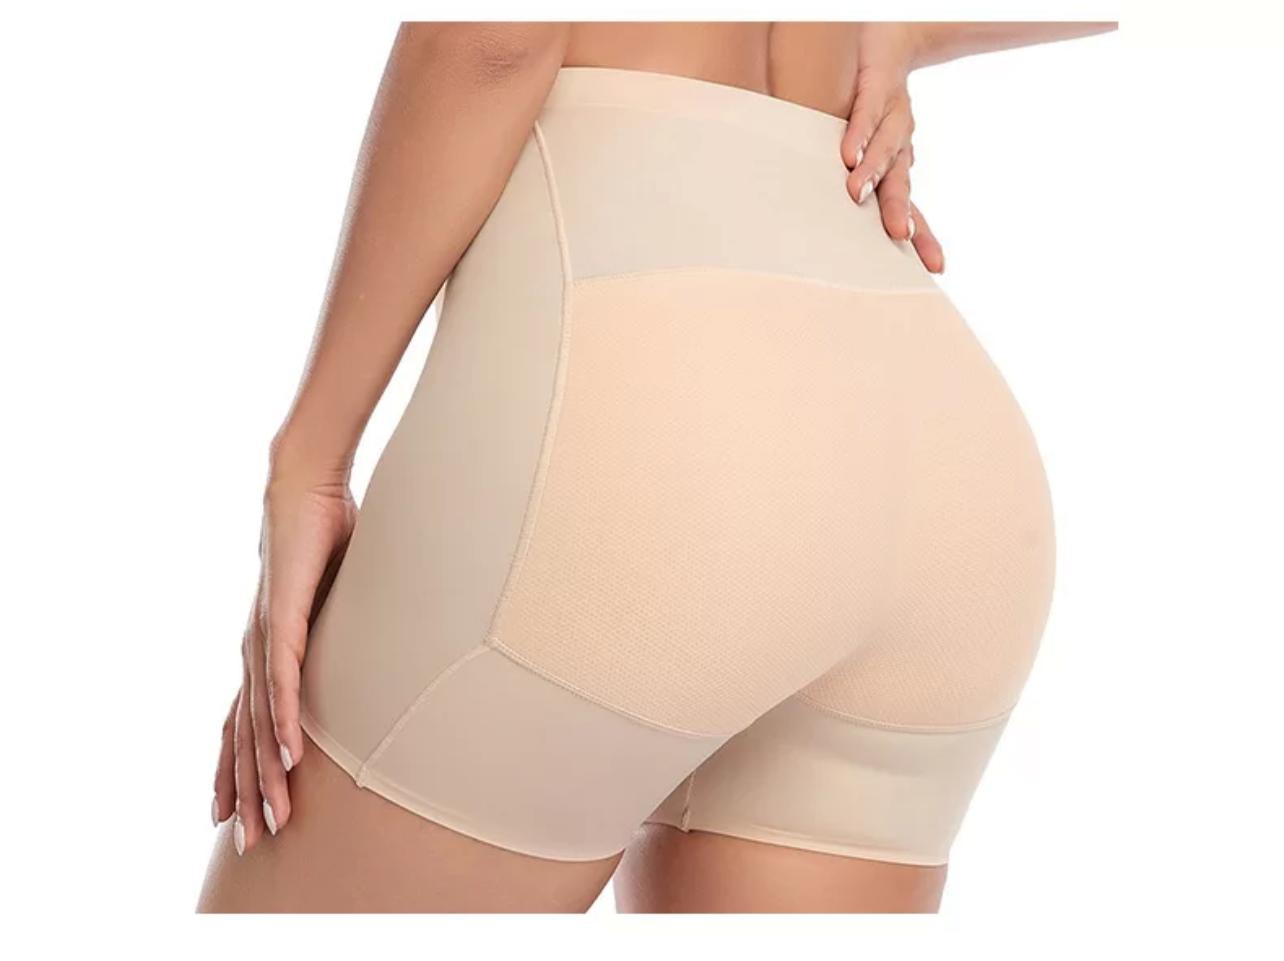 Butt Lifter Seamless Women High Waist Tummy Control Panties Knickers Pant  Briefs Shapewear Underwear Body Shaper Lady (Color : Style2 Purple, Size 